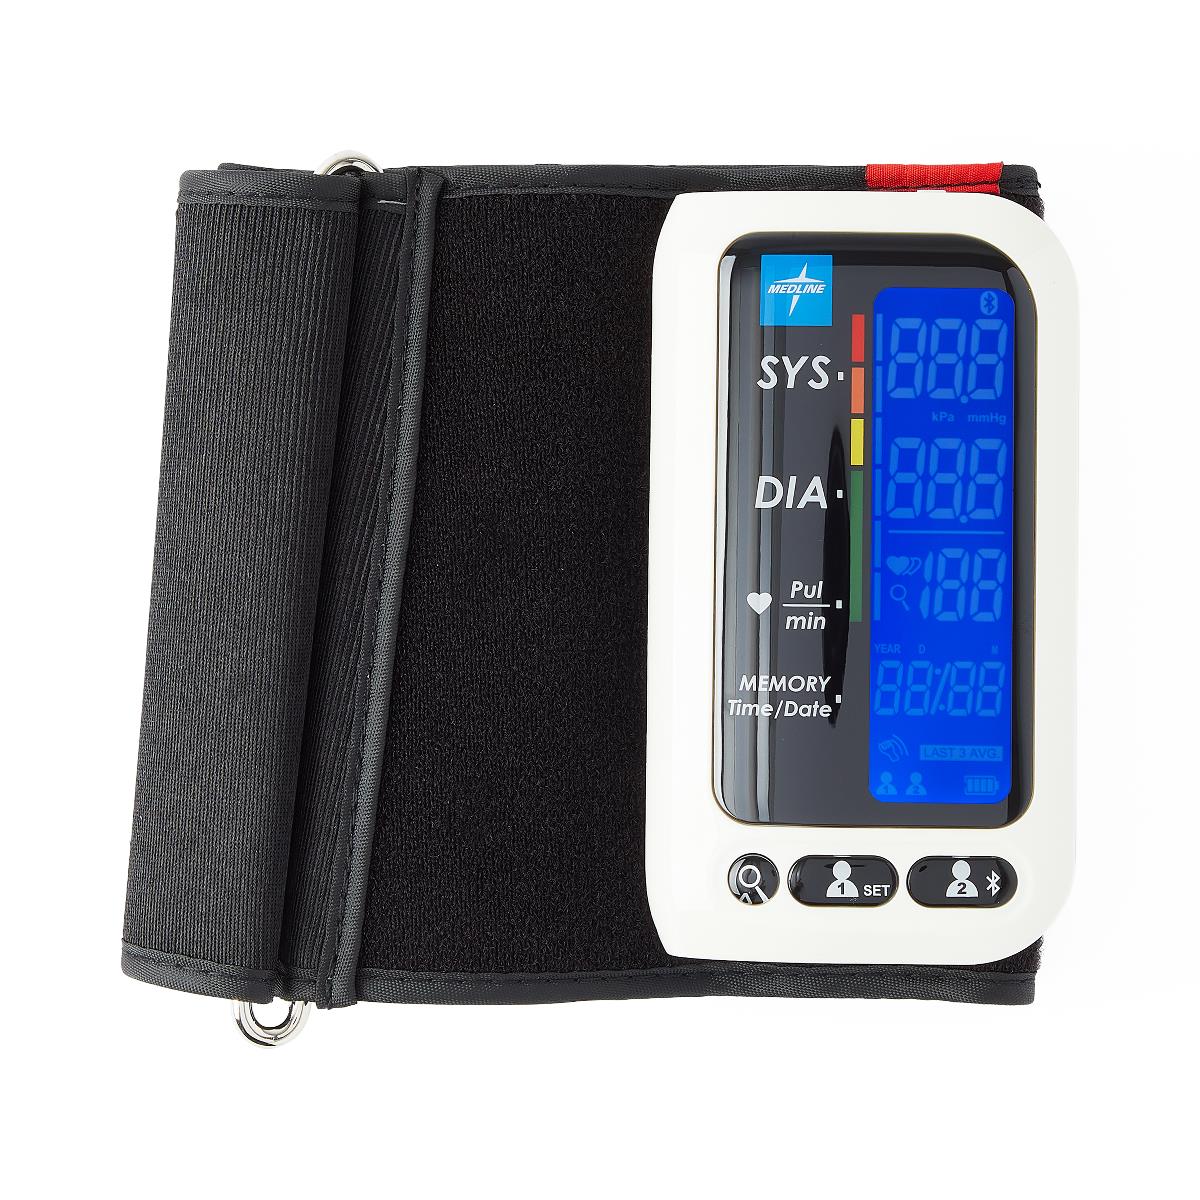 Digital Wrist Blood Pressure Monitor by Medline